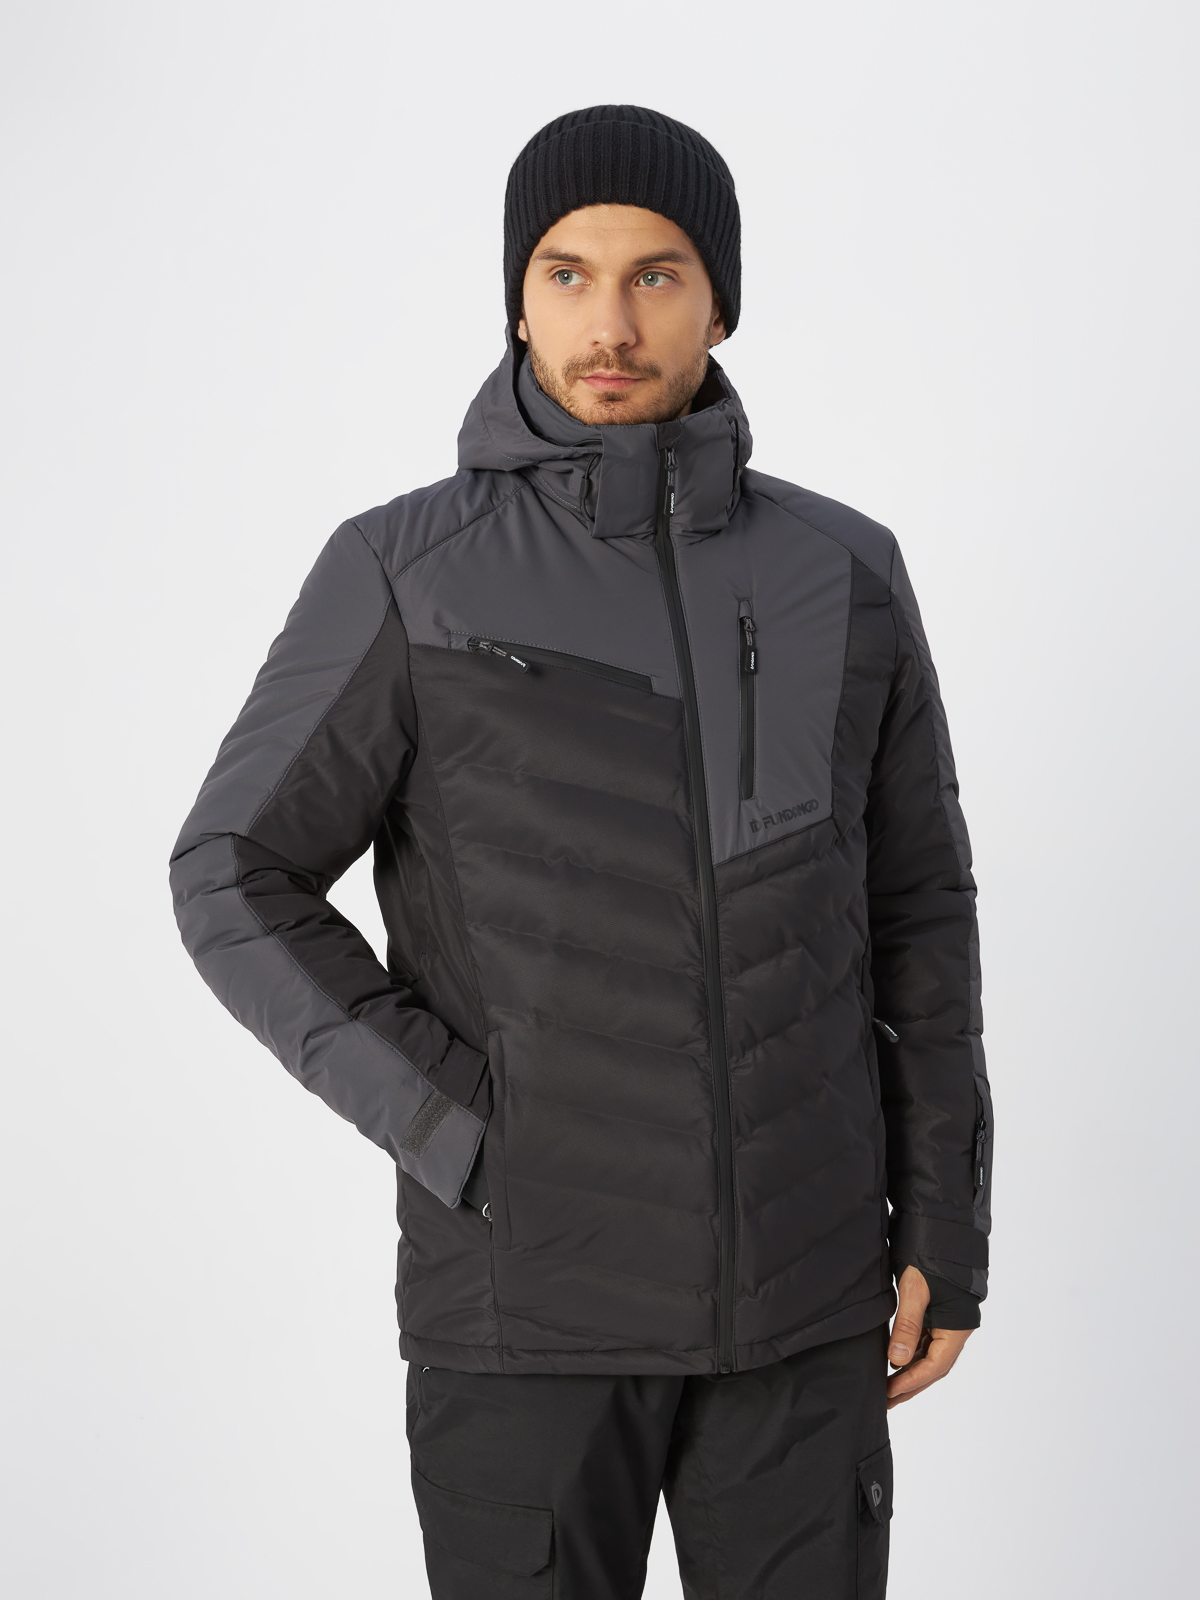 Куртка Fundango для мужчин, размер L, 1QB106, чёрно-серая